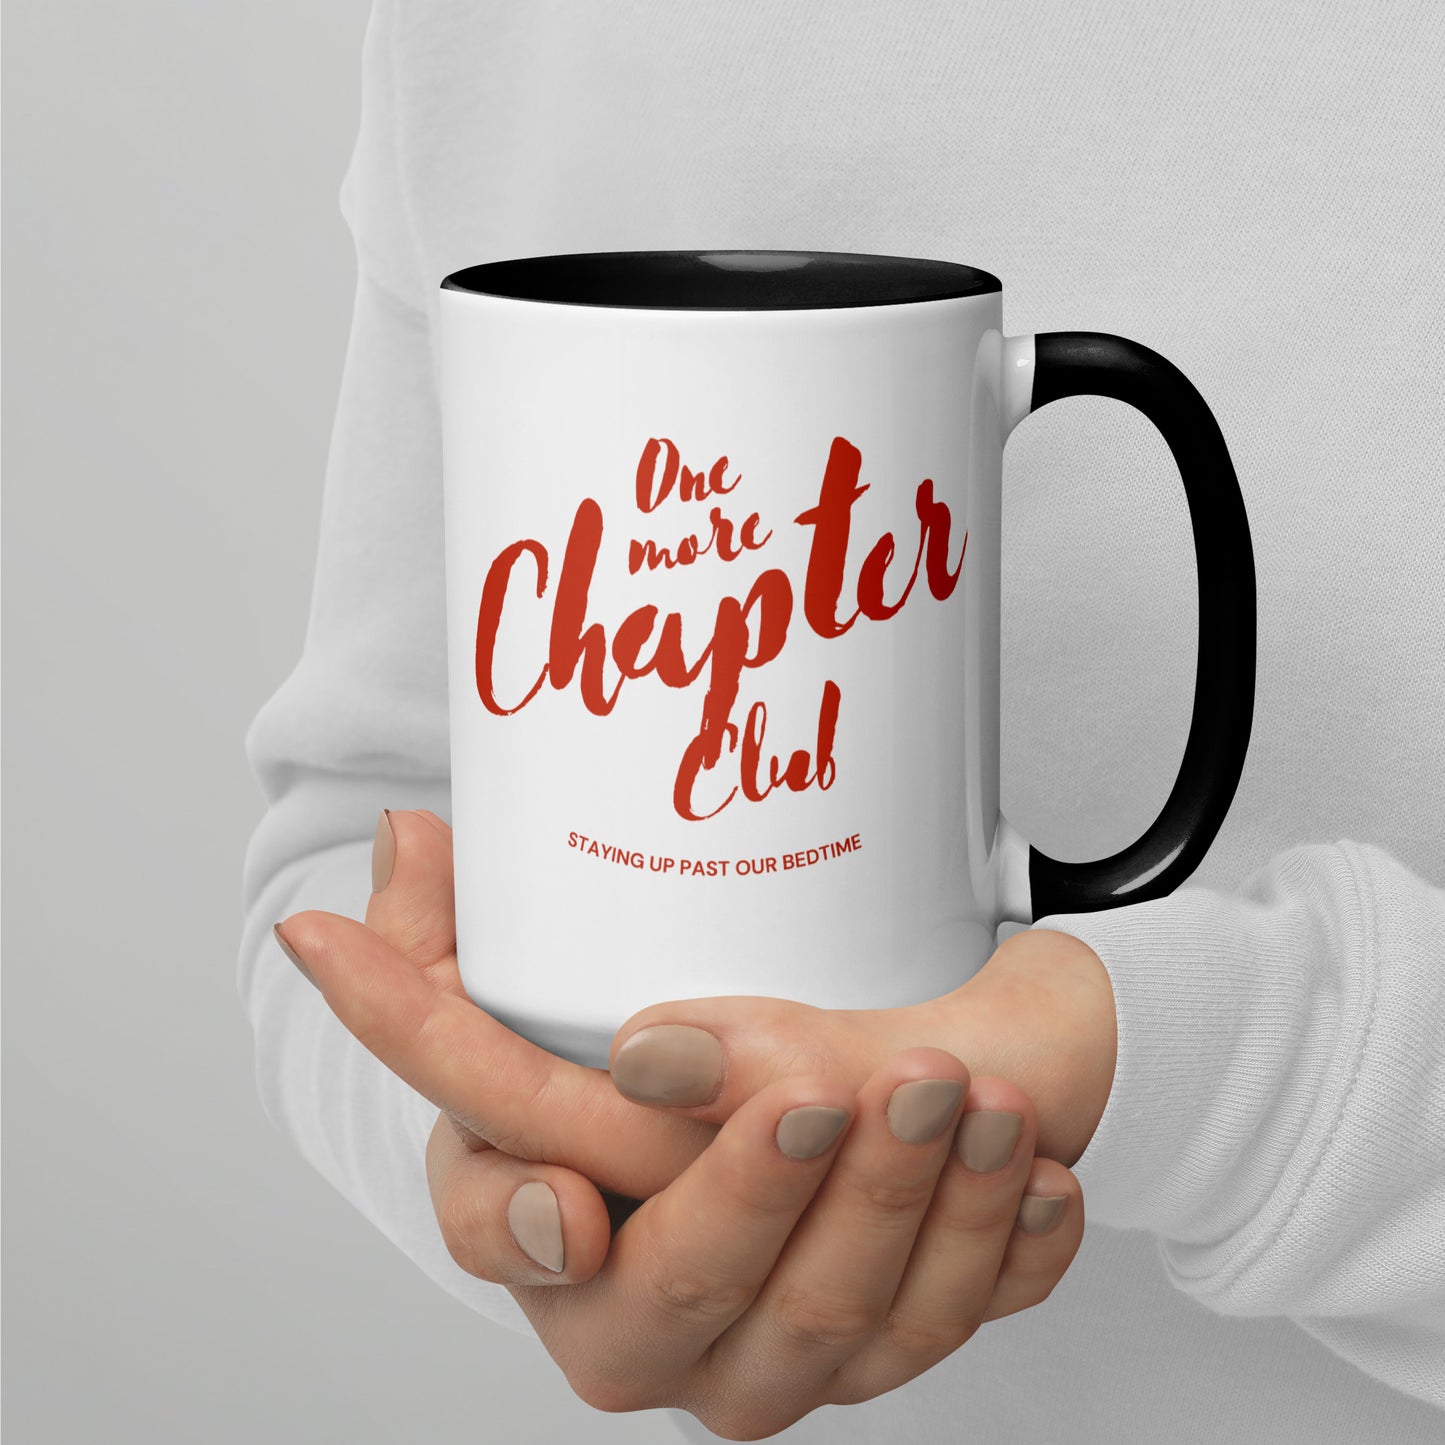 One More Chapter Club | White Glossy Mug